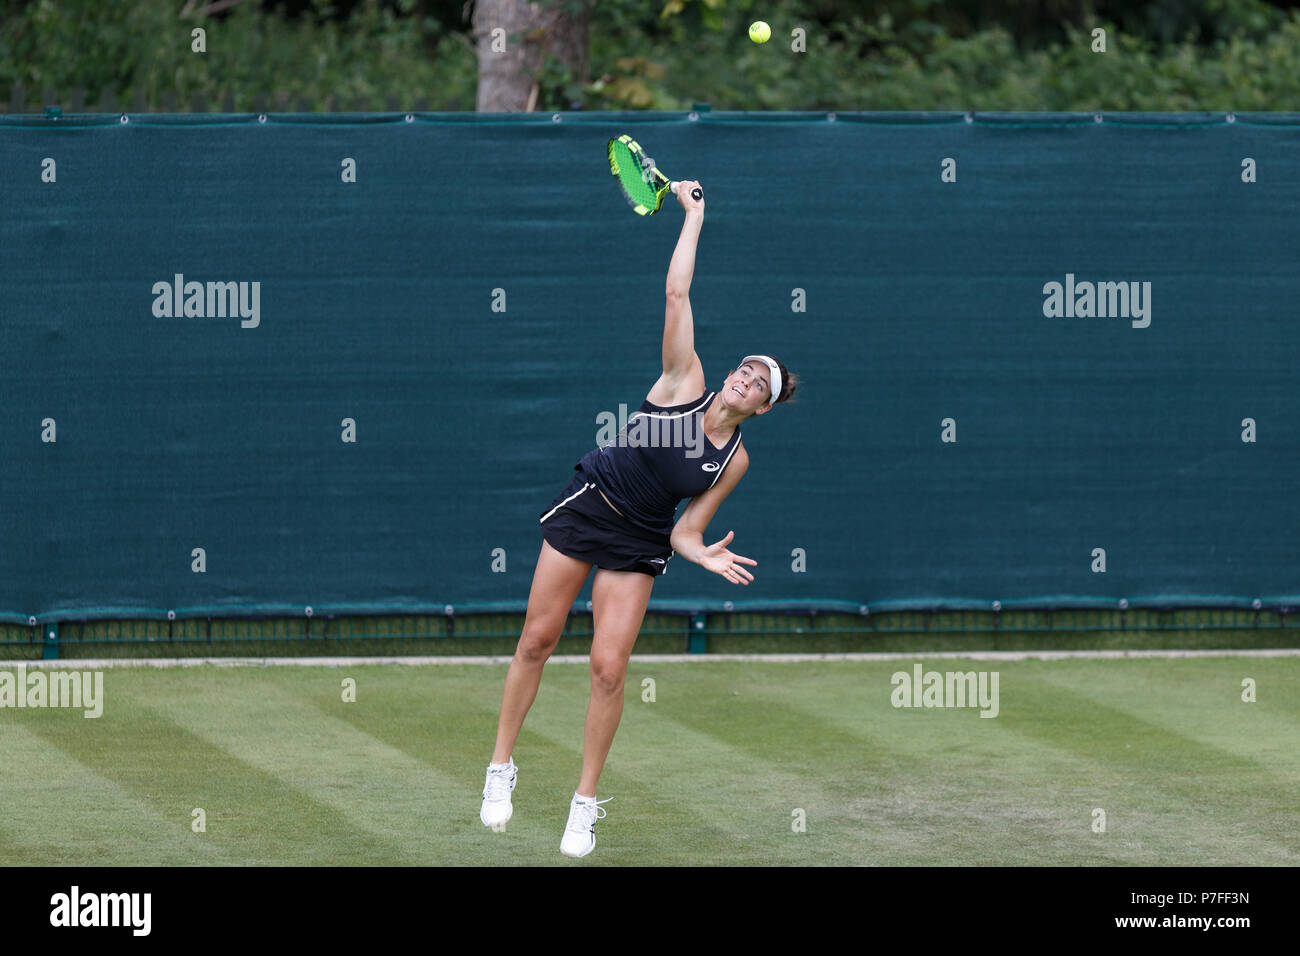 Jennifer Brady, American tennis player, serves during a match. Tennis serve, female tennis. Stock Photo